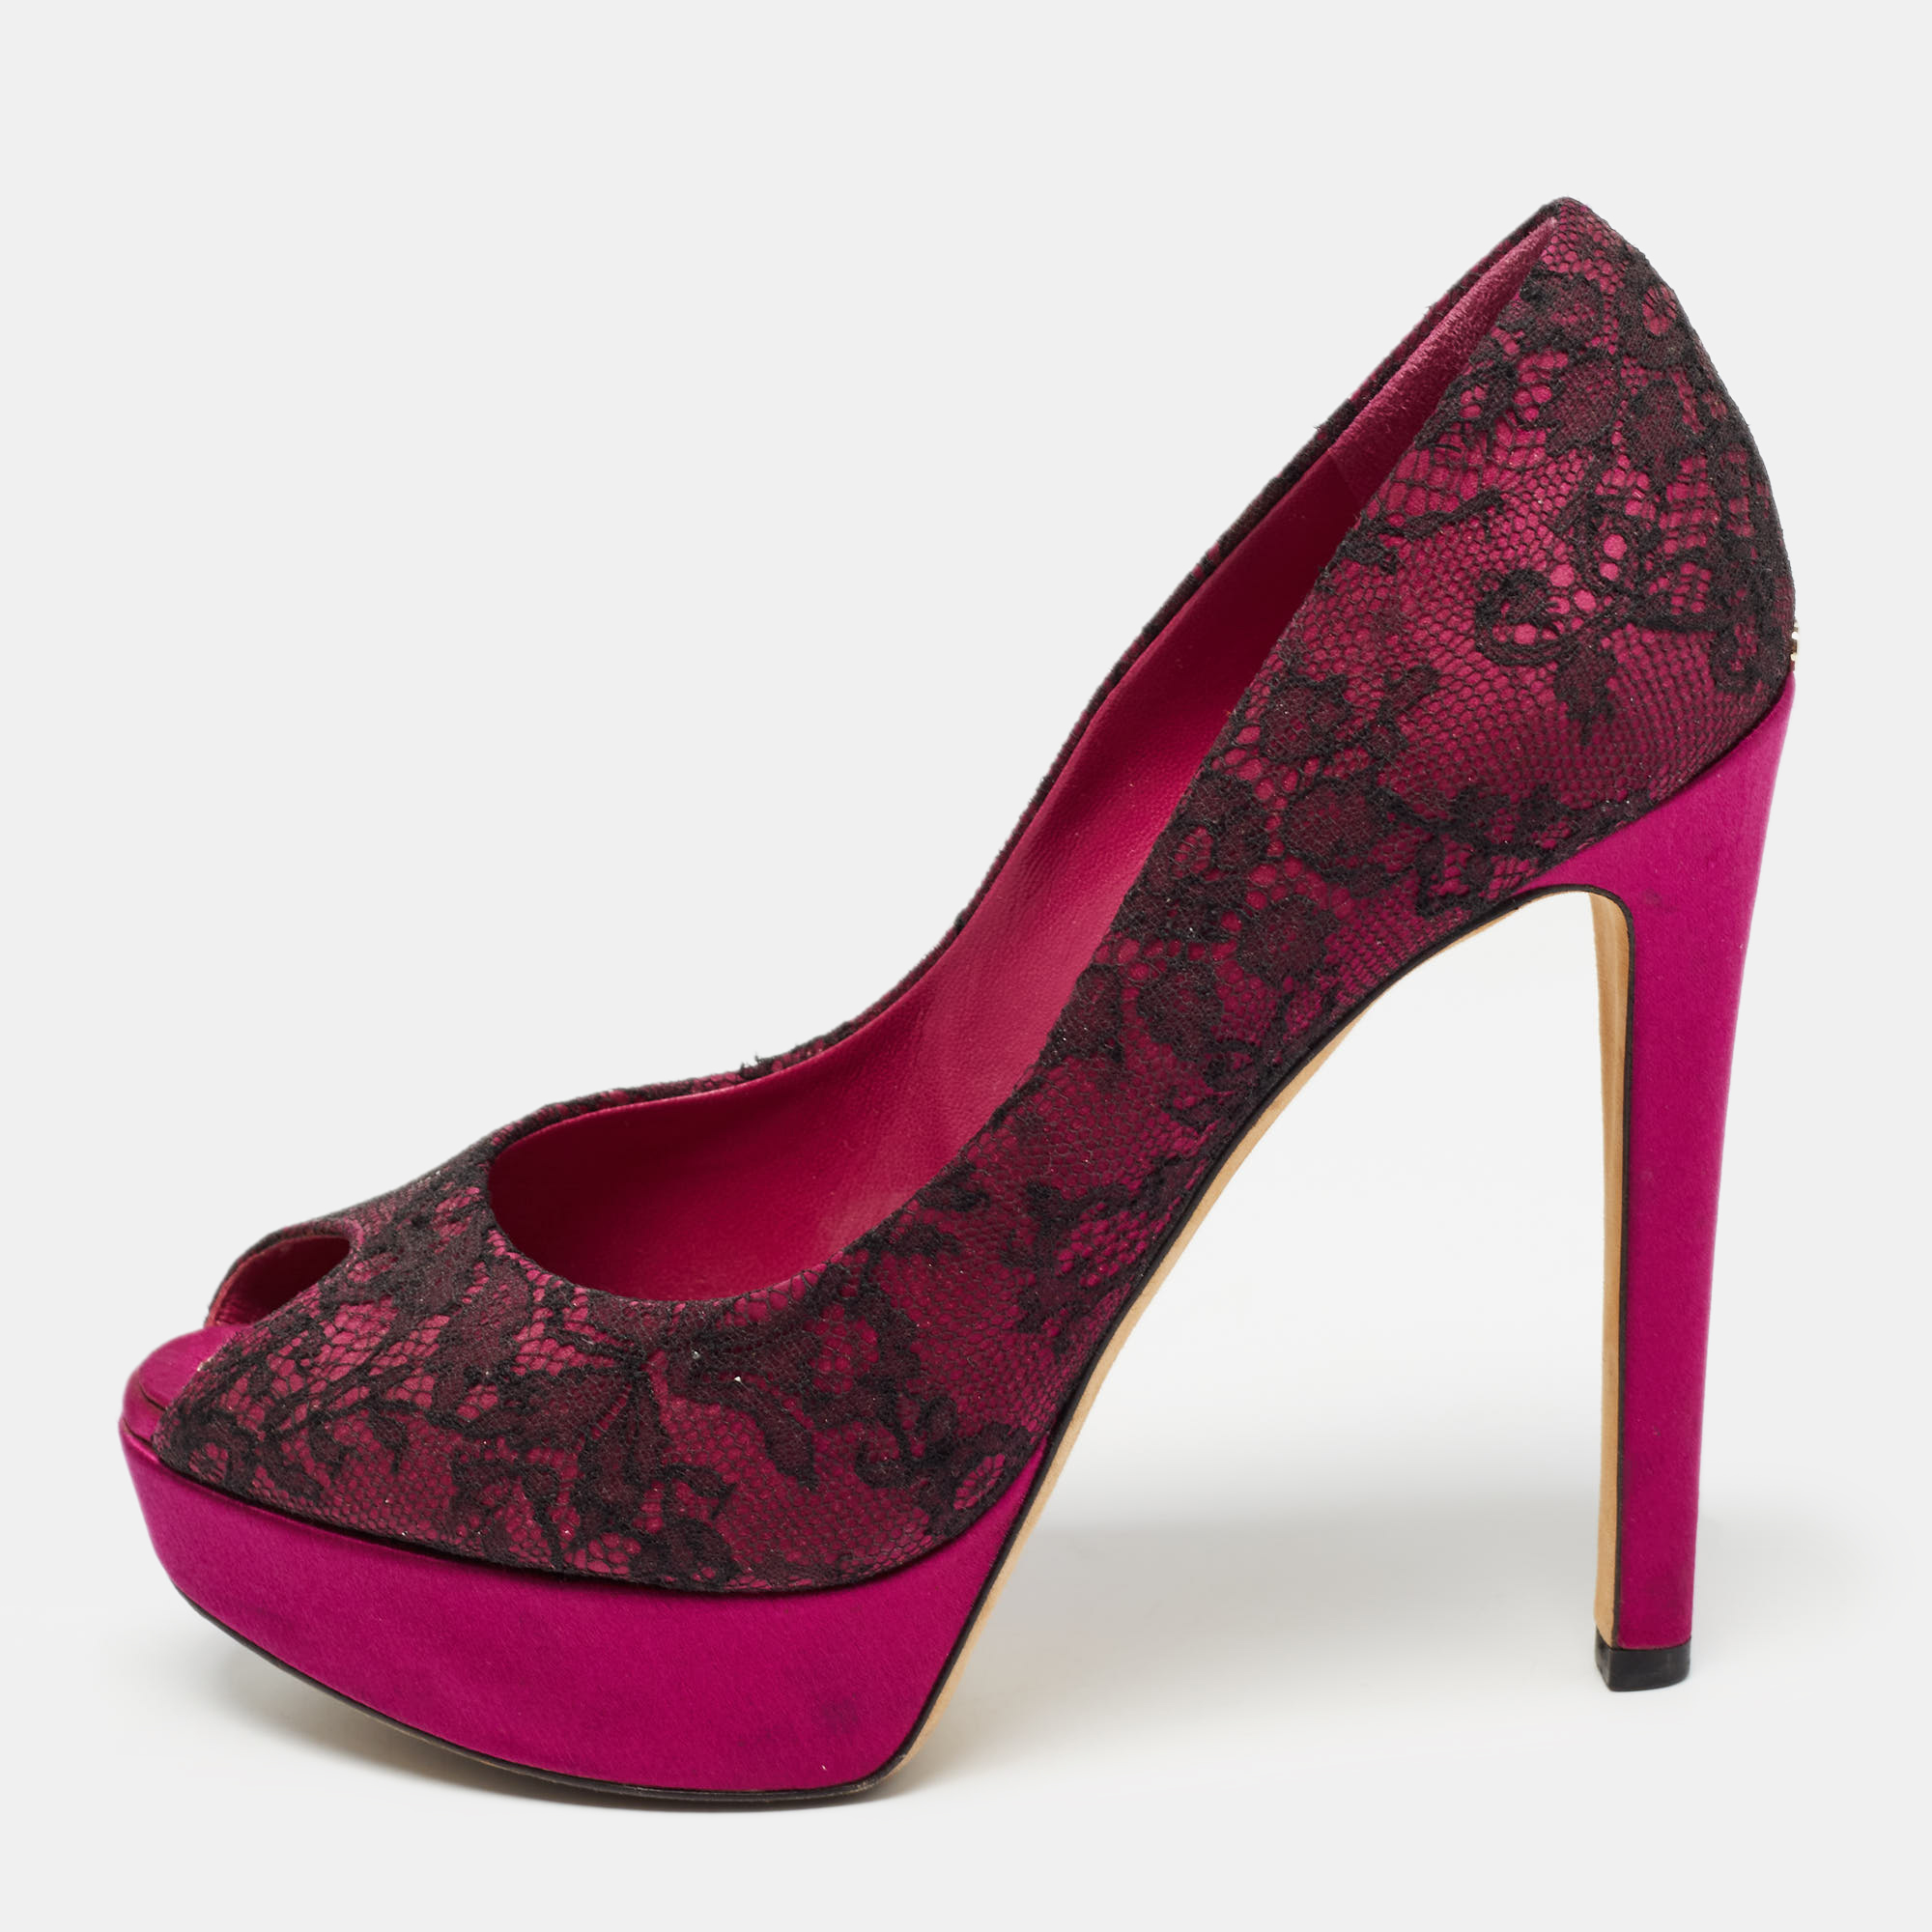 Dior purple/black satin and lace peep toe platform pumps size 39